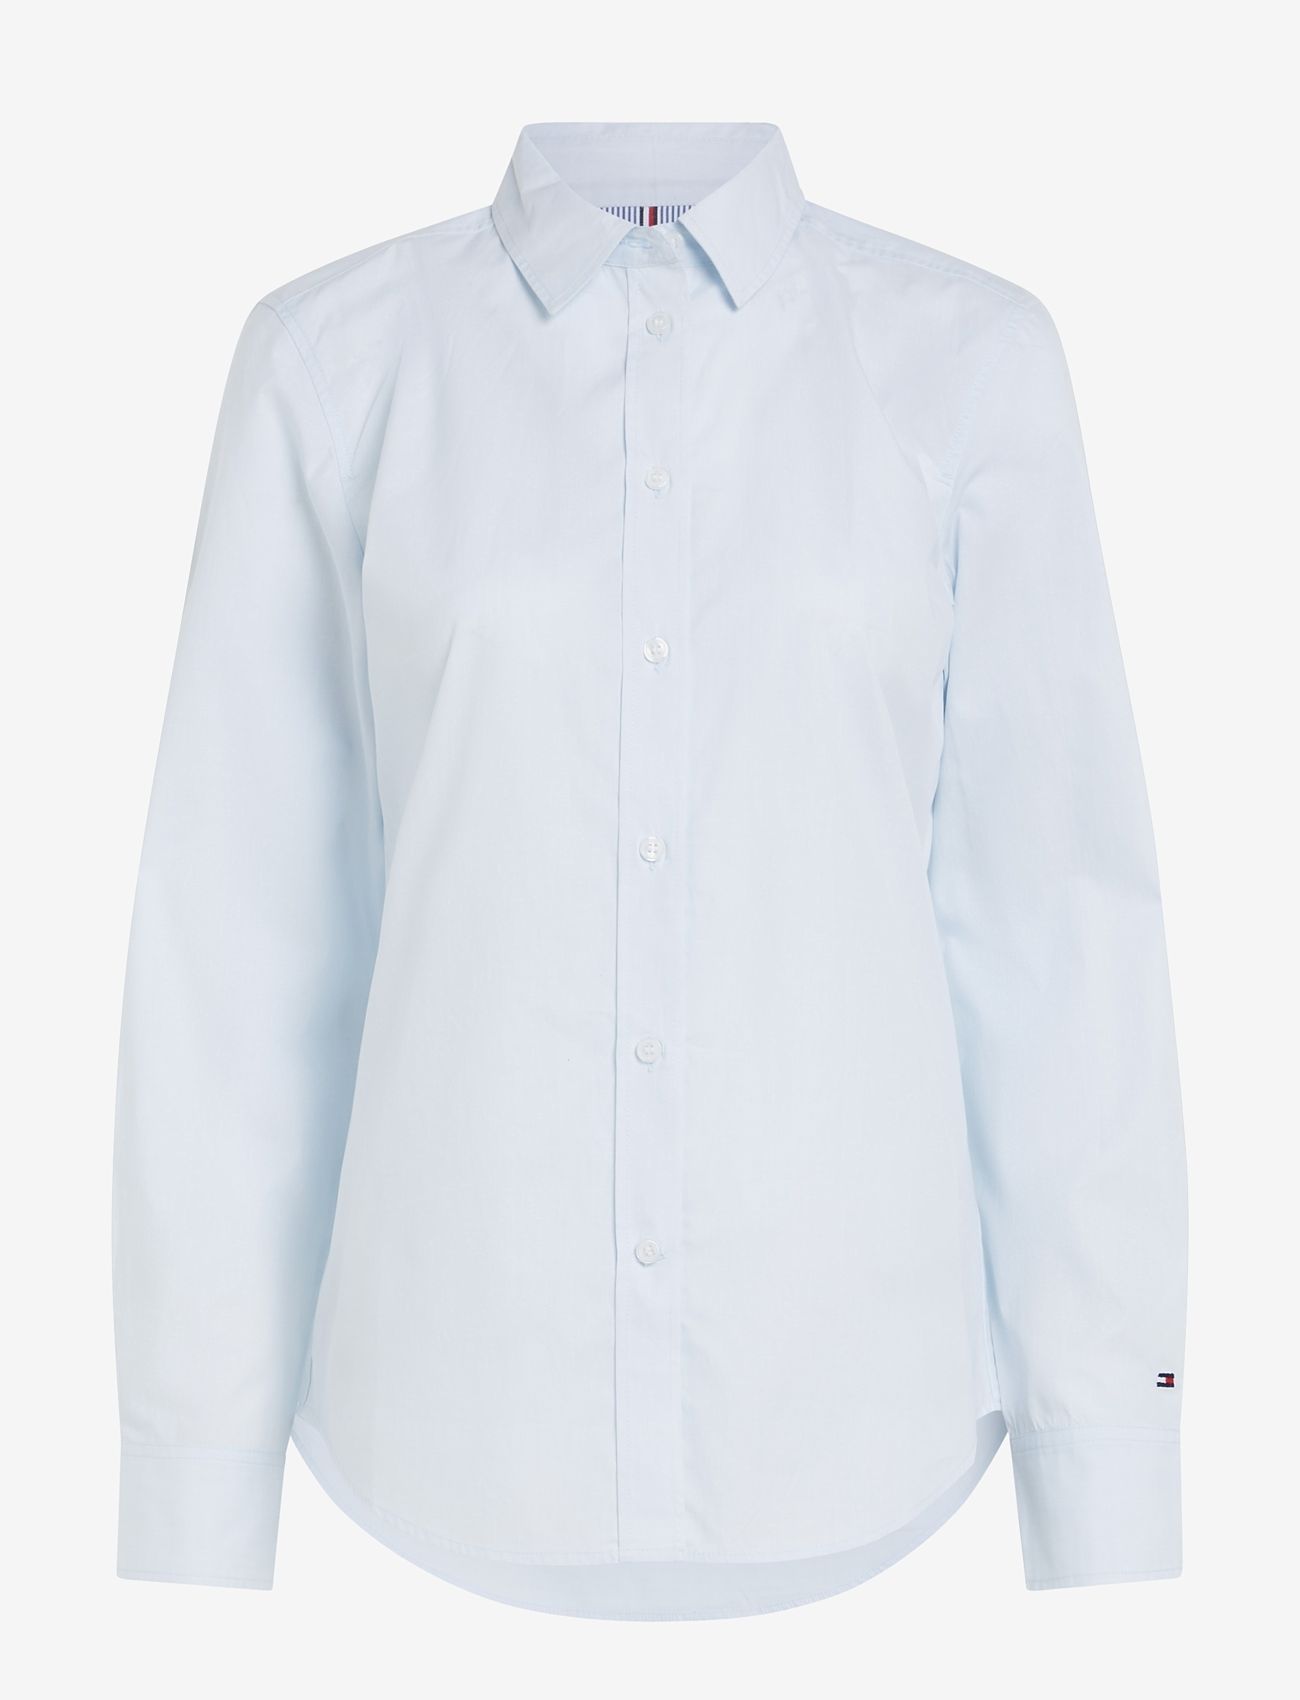 Tommy Hilfiger - ORG CO POPLIN REGULAR SHIRT LS - long-sleeved shirts - breezy blue - 0